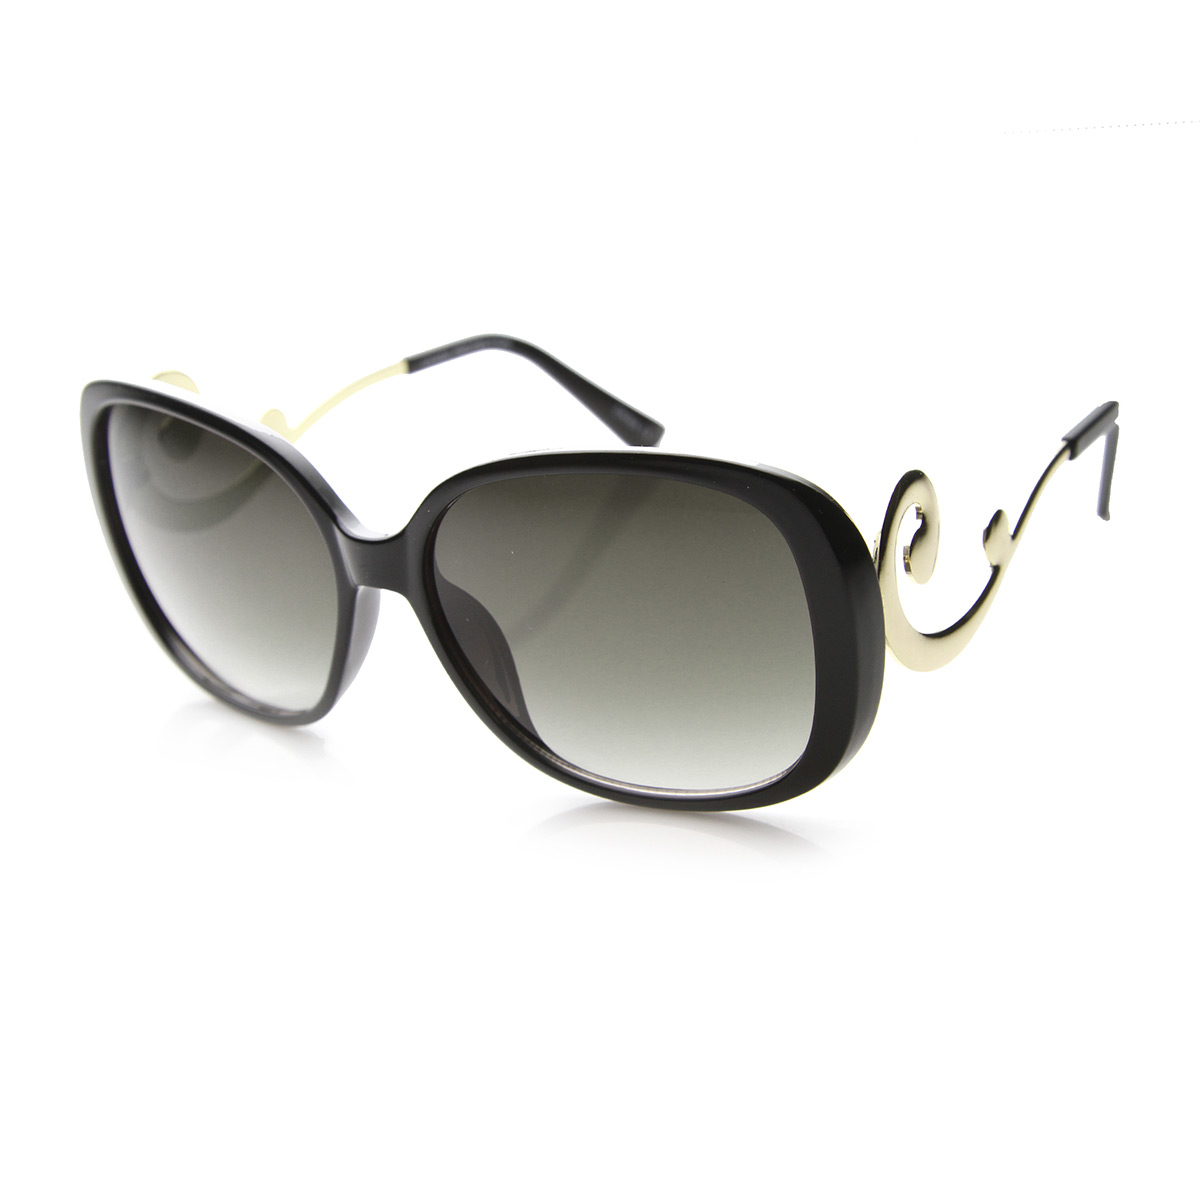 Womens High Fashion Metal Temple Baroque Square Sunglasses 9774 - Tortoise-Gold / Amber